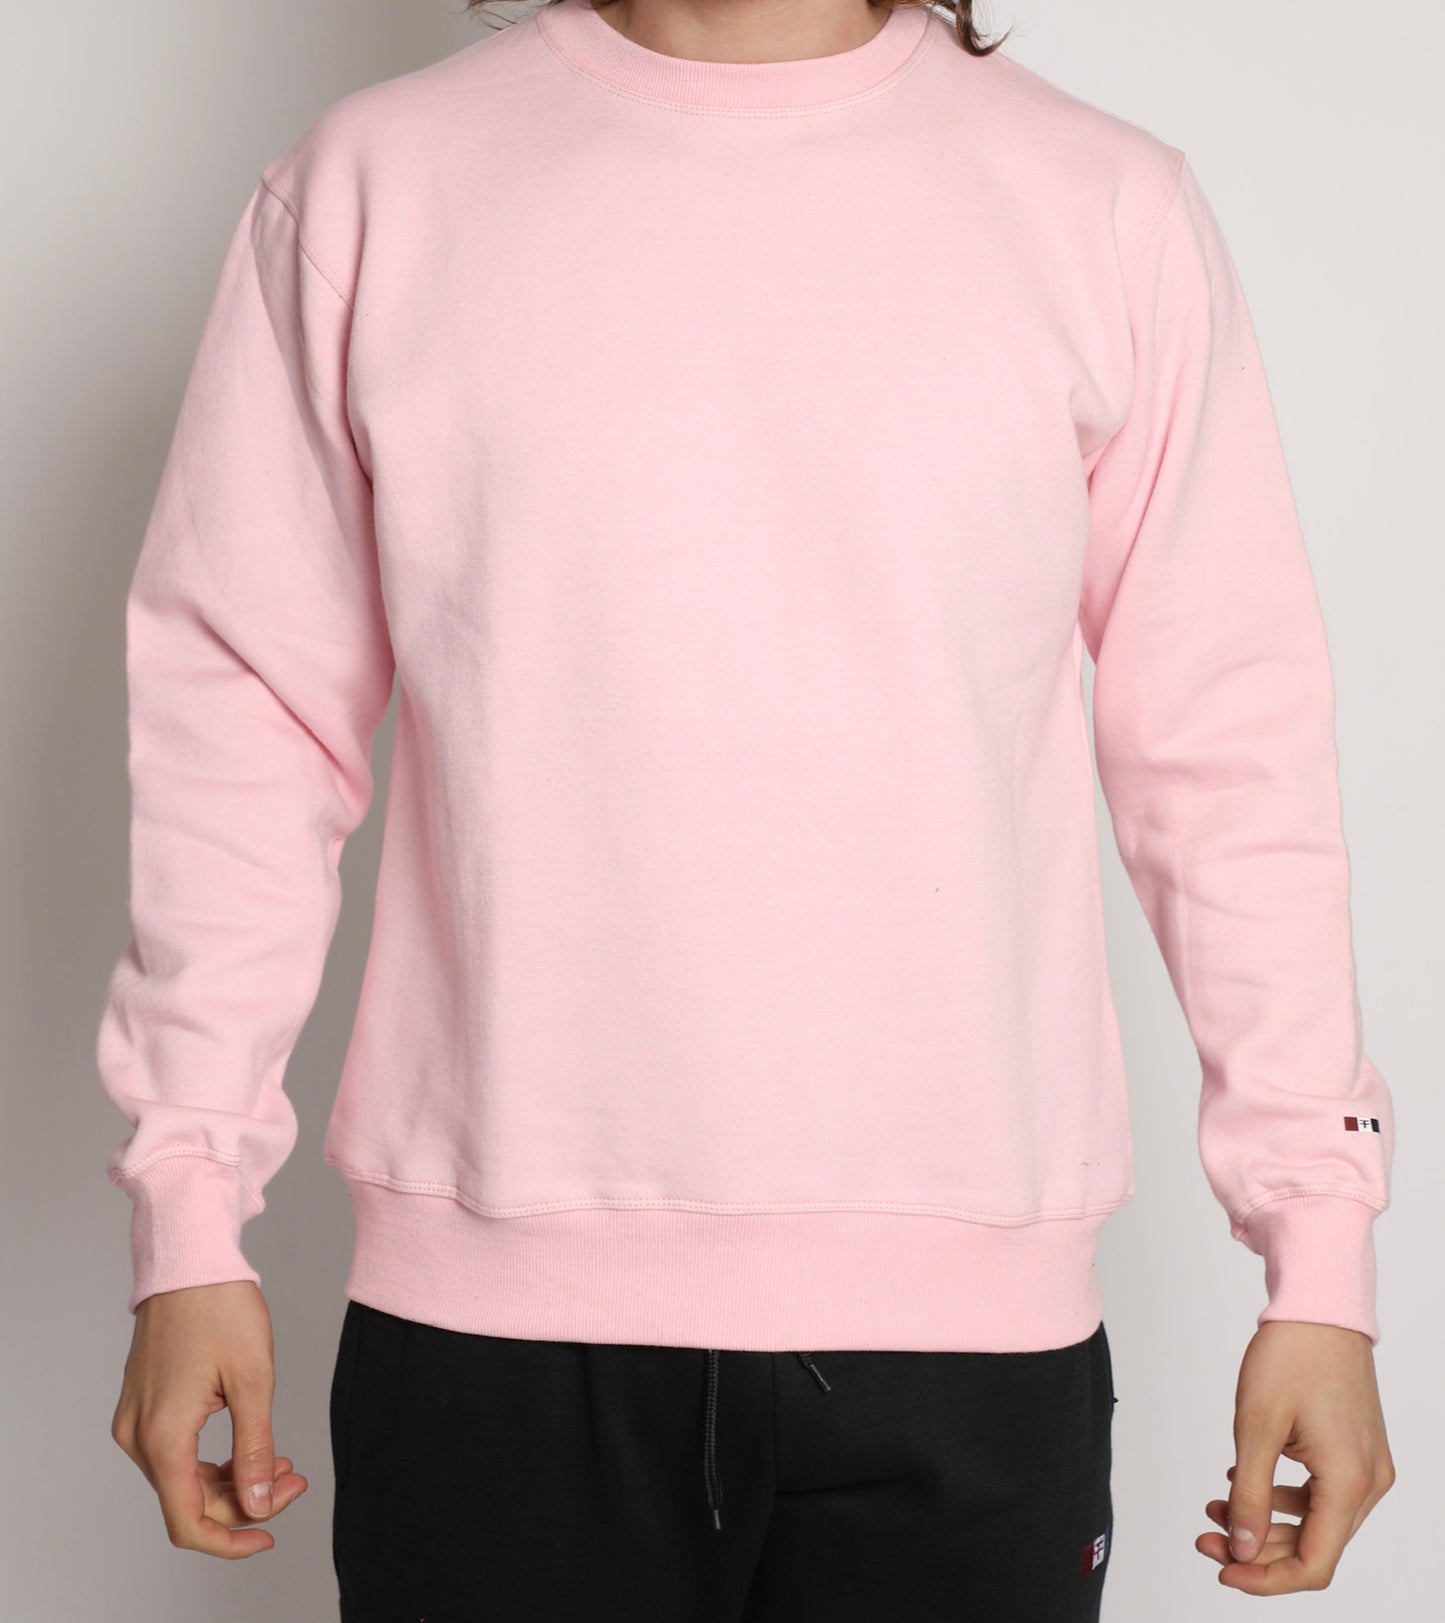 Essential neck fashcolony crew - SweatShirt – Pink